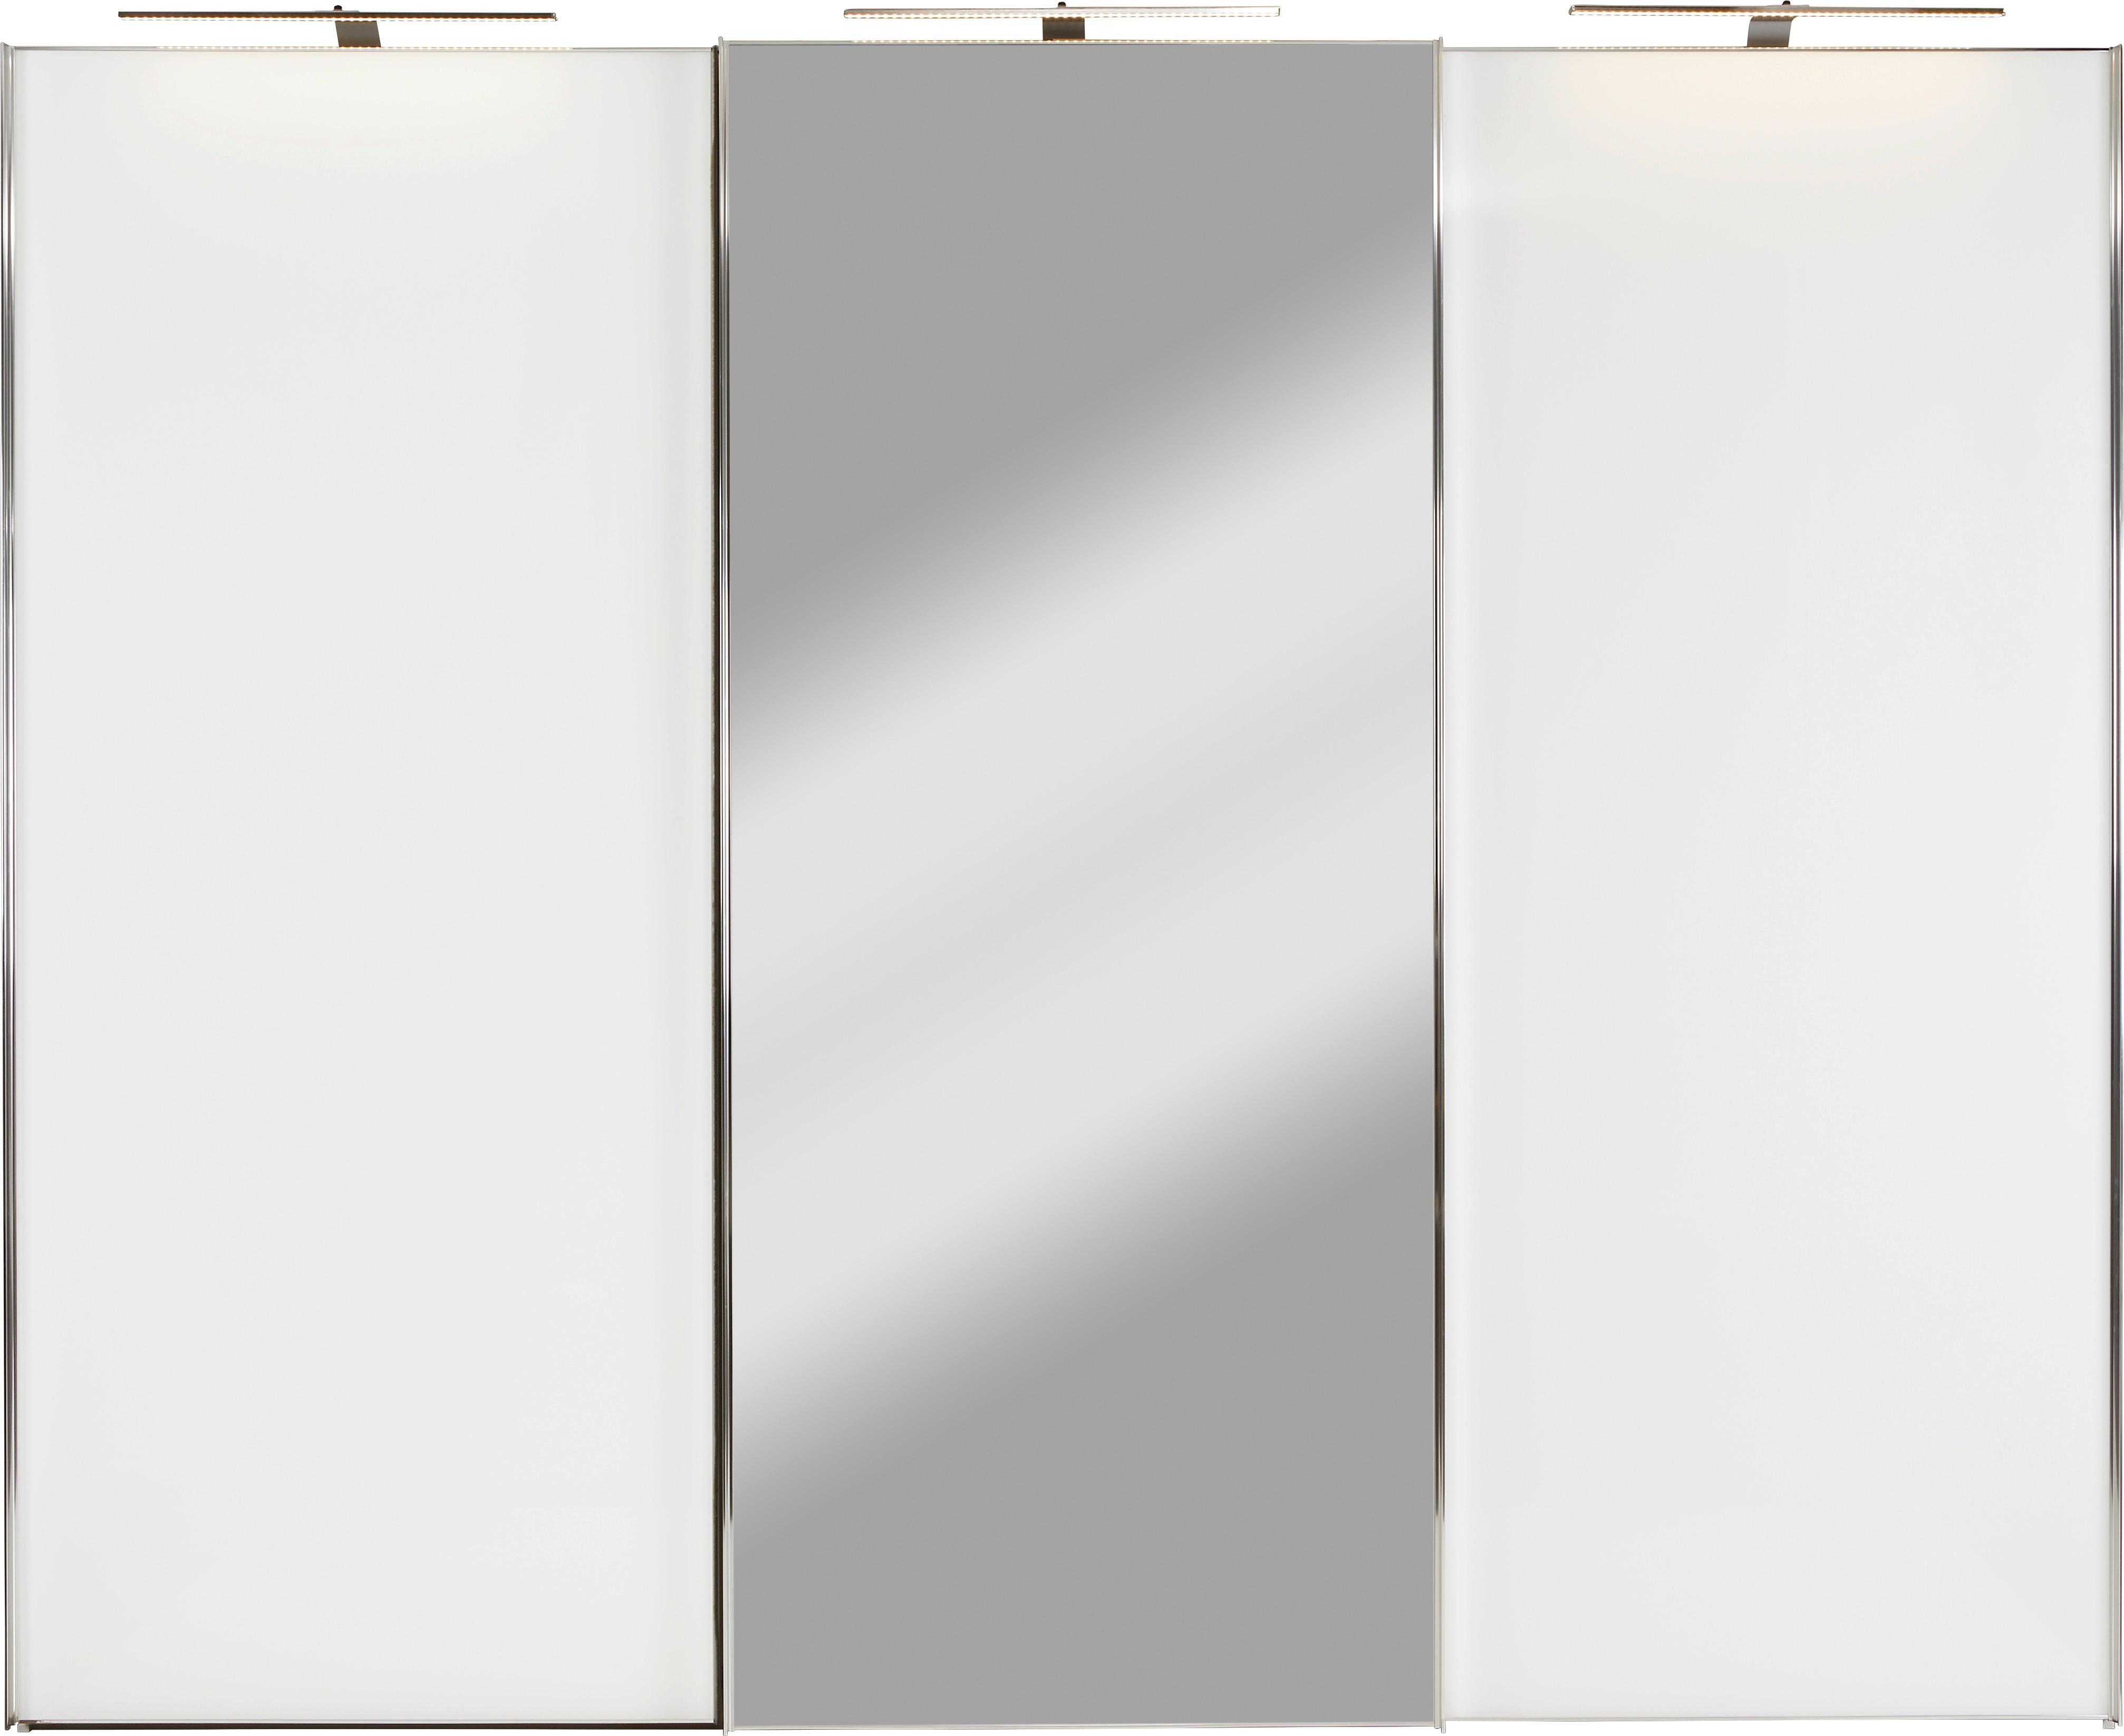 Šatní Skříň Se Zrcadlem Sonate Rom, 249x222 Cm, Bílá - bílá/barvy chromu, Moderní, kov/dřevo (249/222/68cm) - Luca Bessoni